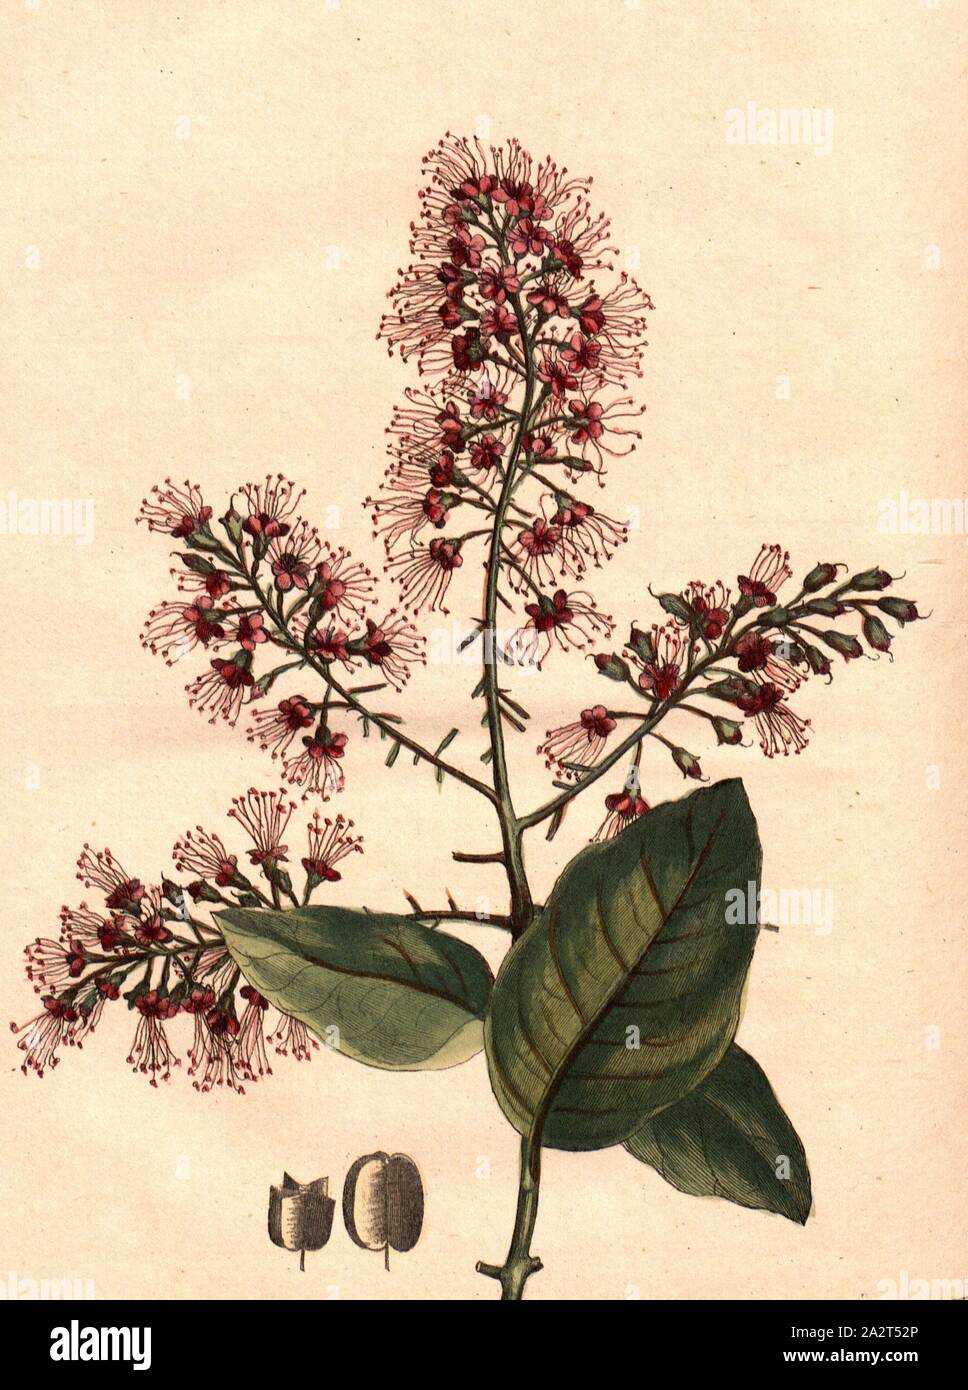 Aigrette, Scarlet-bush (Cristaria coccinea), Signed: P. Sonnerat pinx, Milsan sculp, Pl. 140, before p. 247 (Vol. 2), Sonnerat, Pierre M. (pinx.); Milsan (sculp.), 1782, Sonnerat, Pierre Stock Photo